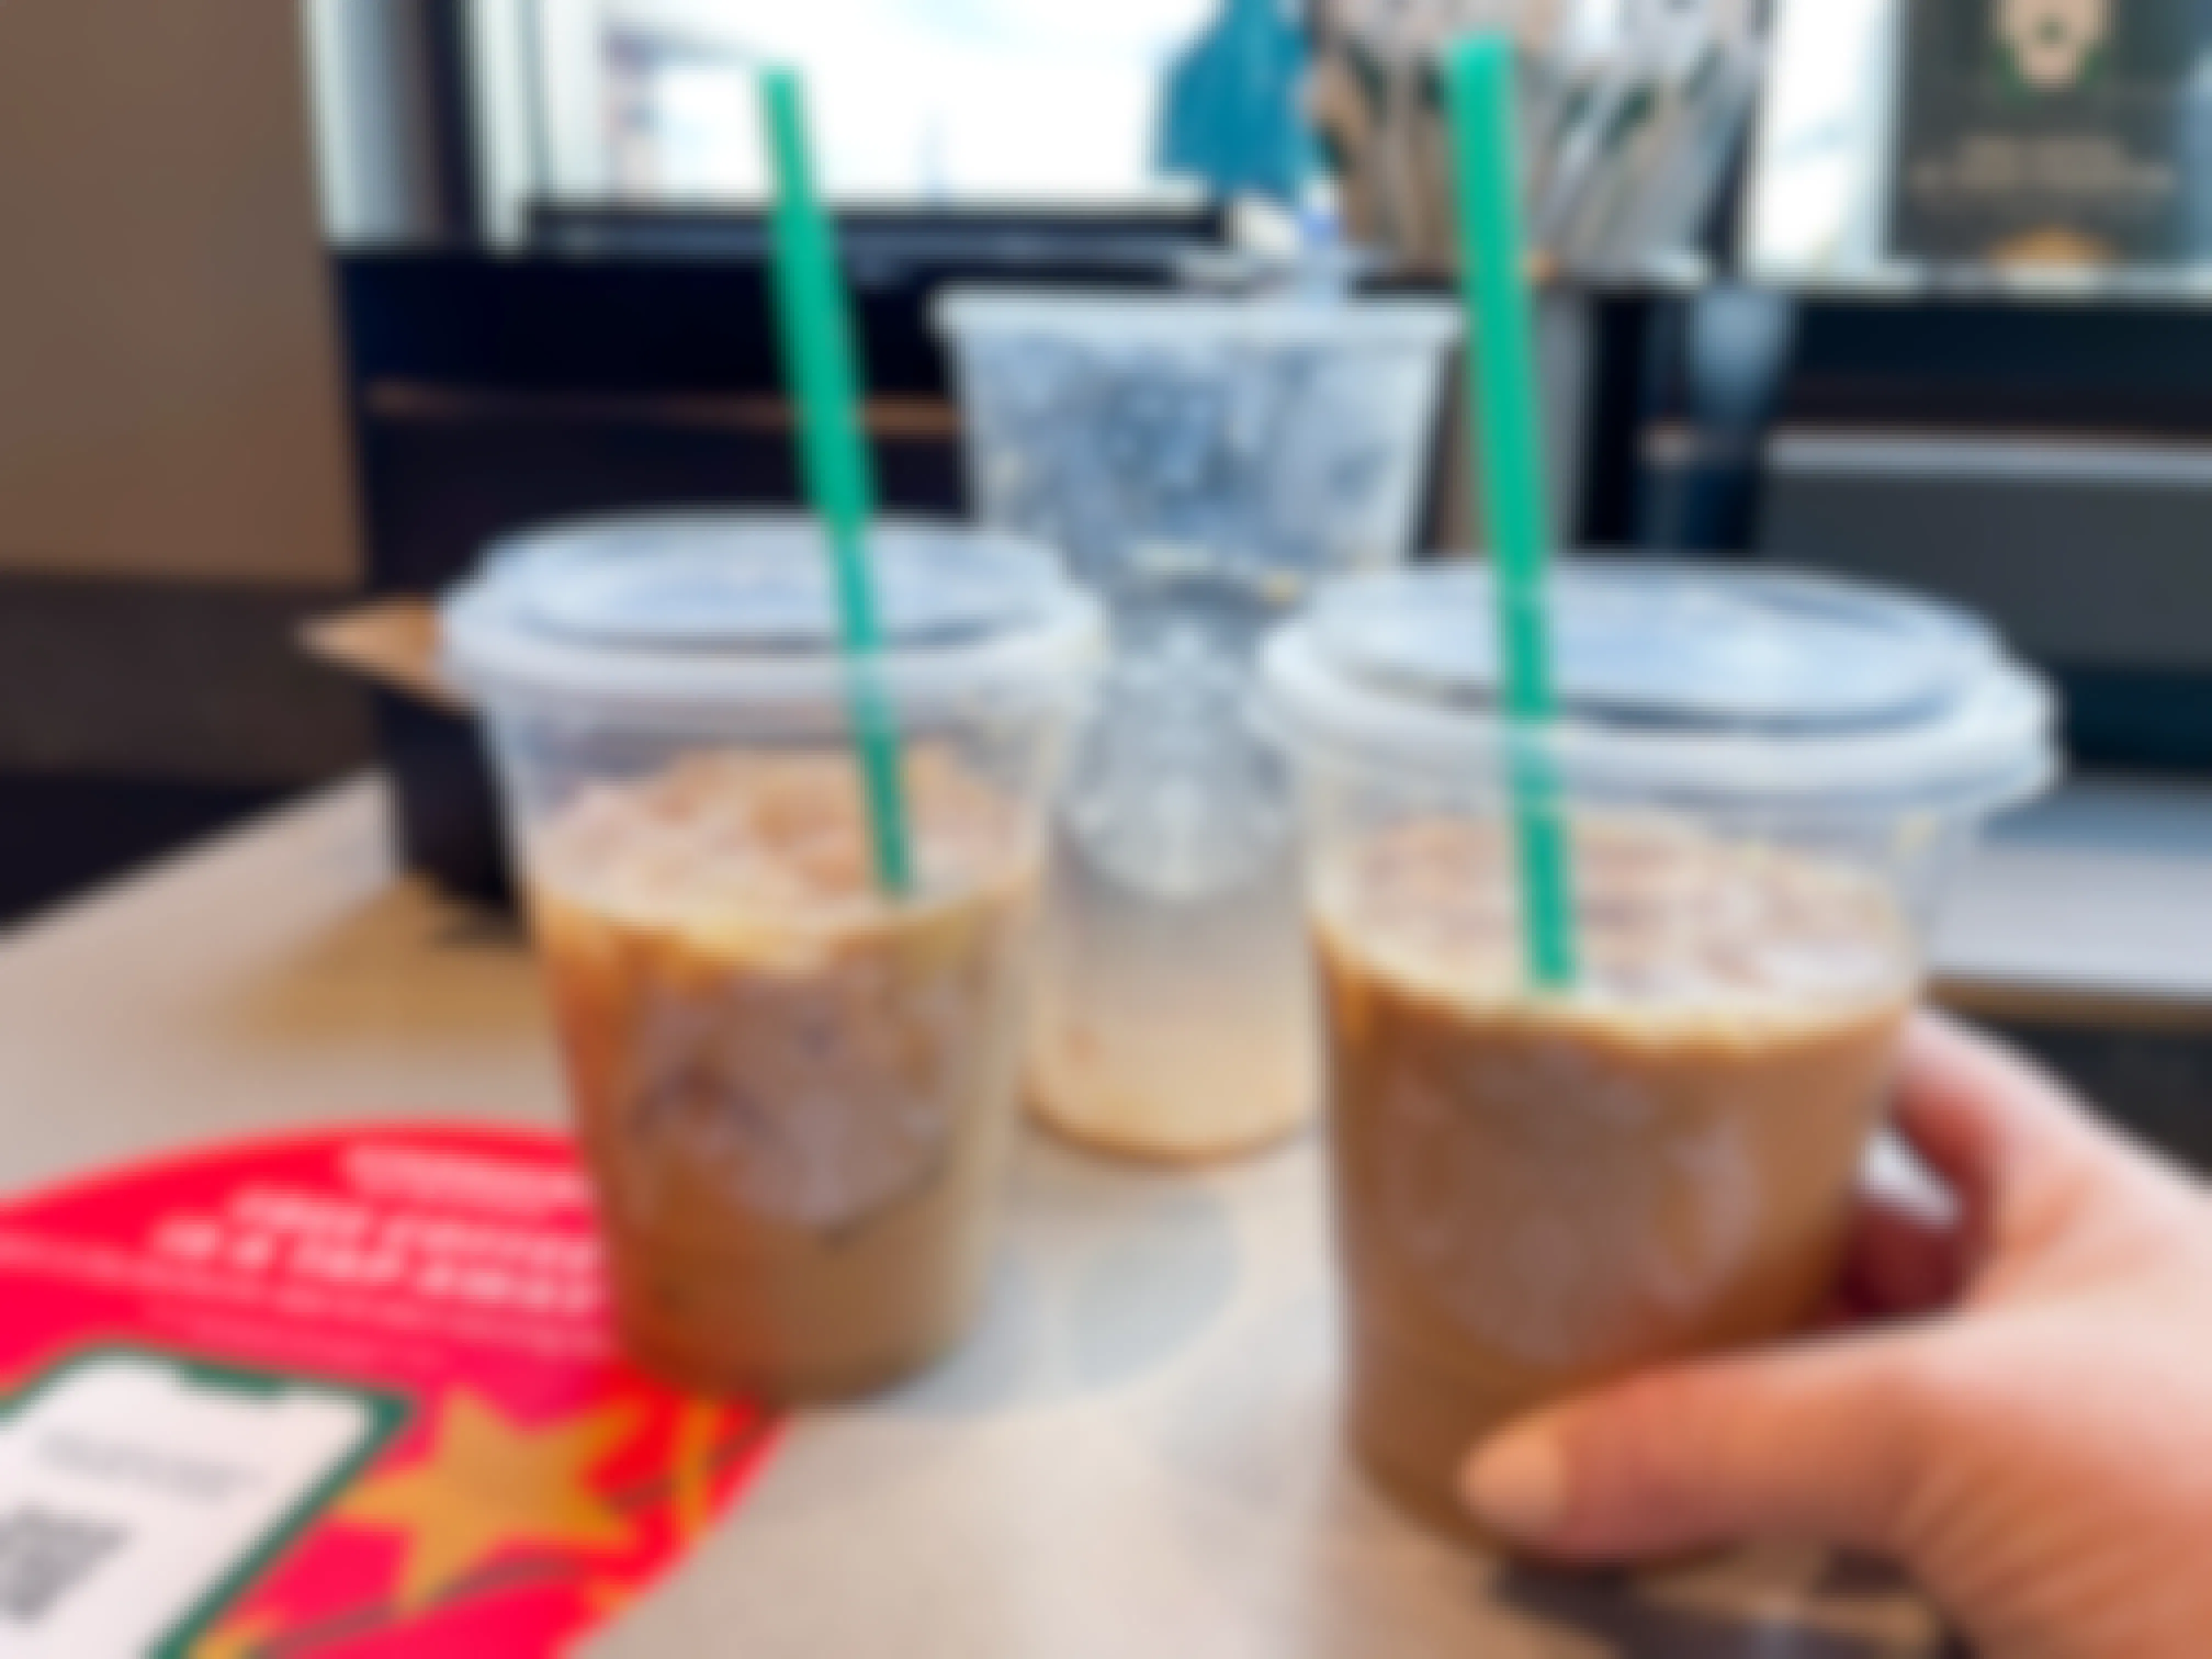 A venti Starbucks iced coffee split into two tall cups.